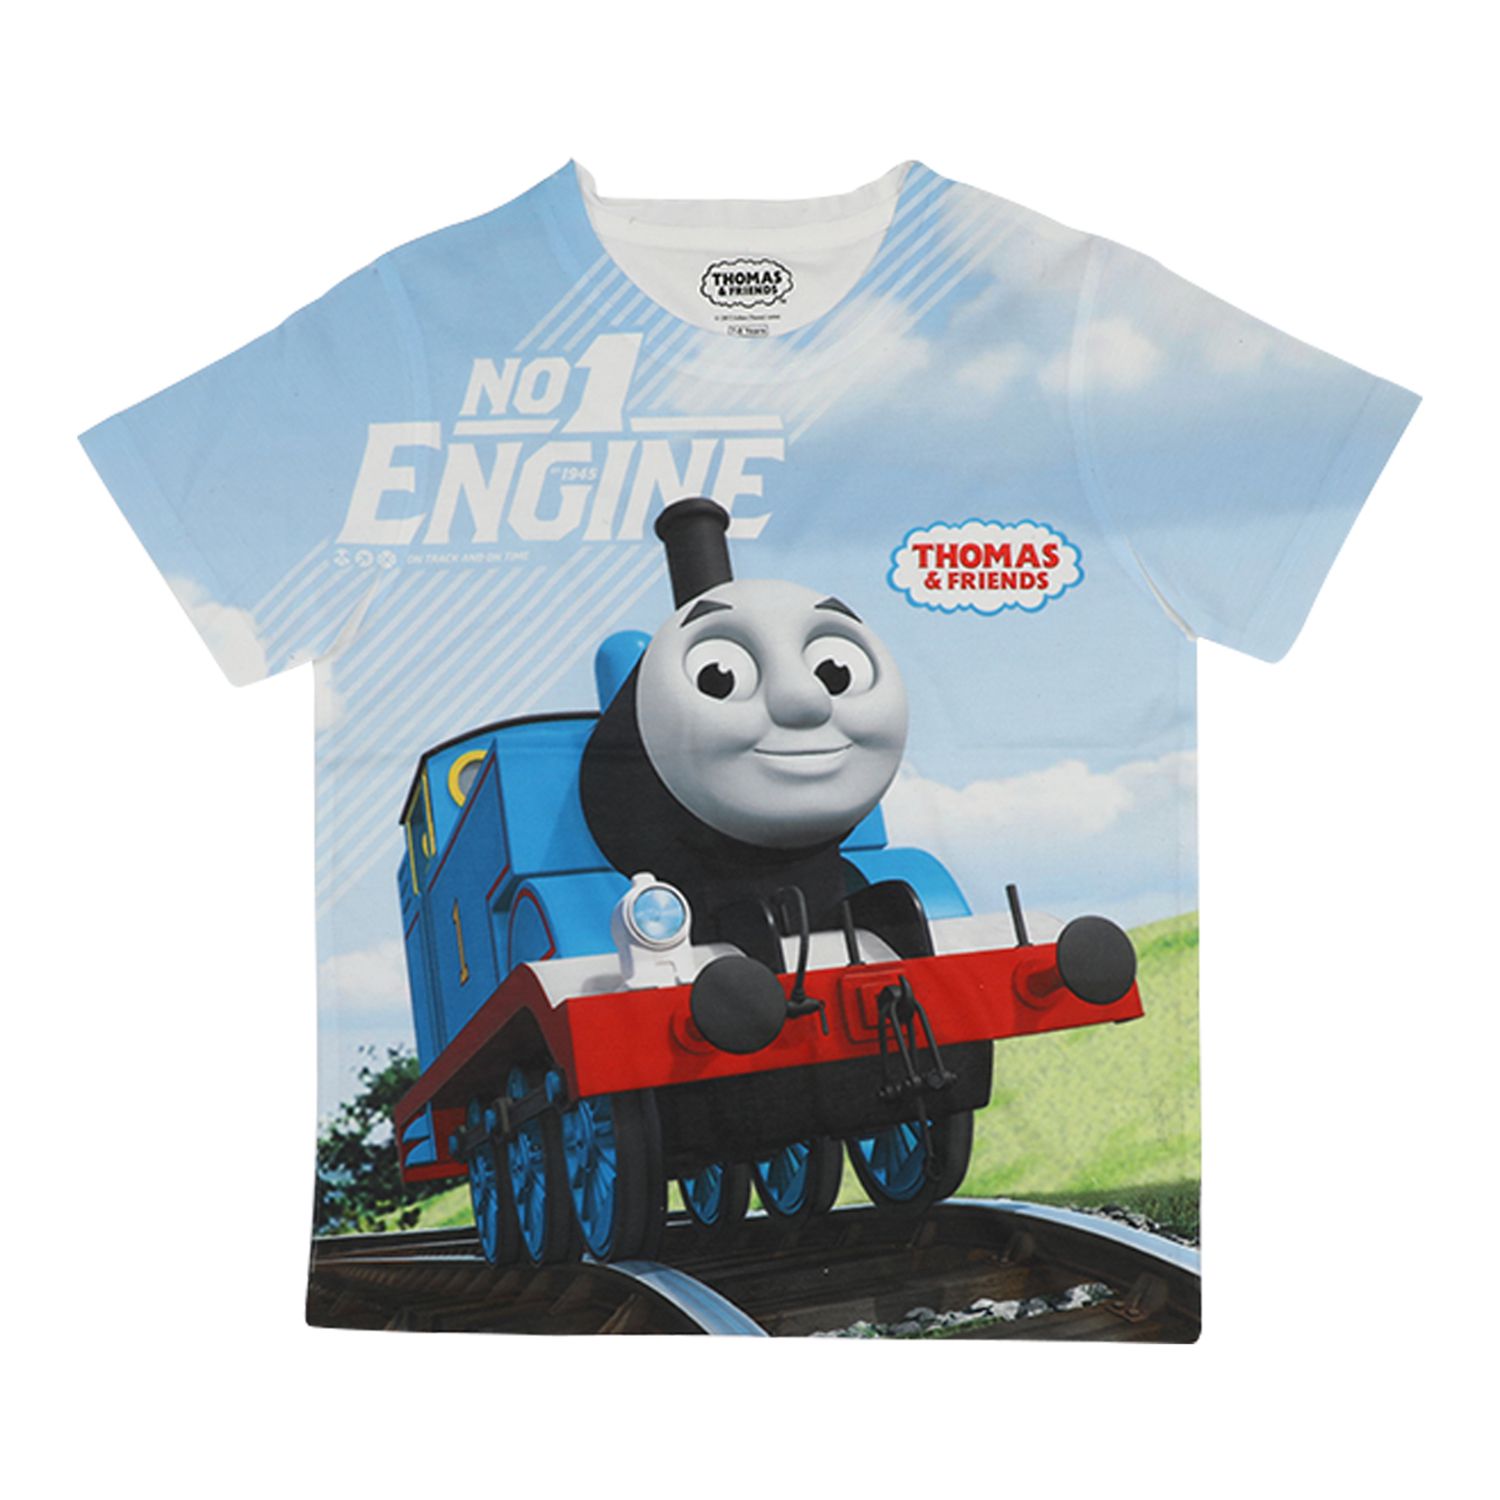 Kleding Unisex kinderkleding Tops & T-shirts T-shirts T-shirts met print Toddler Thomas the Train Shirts 